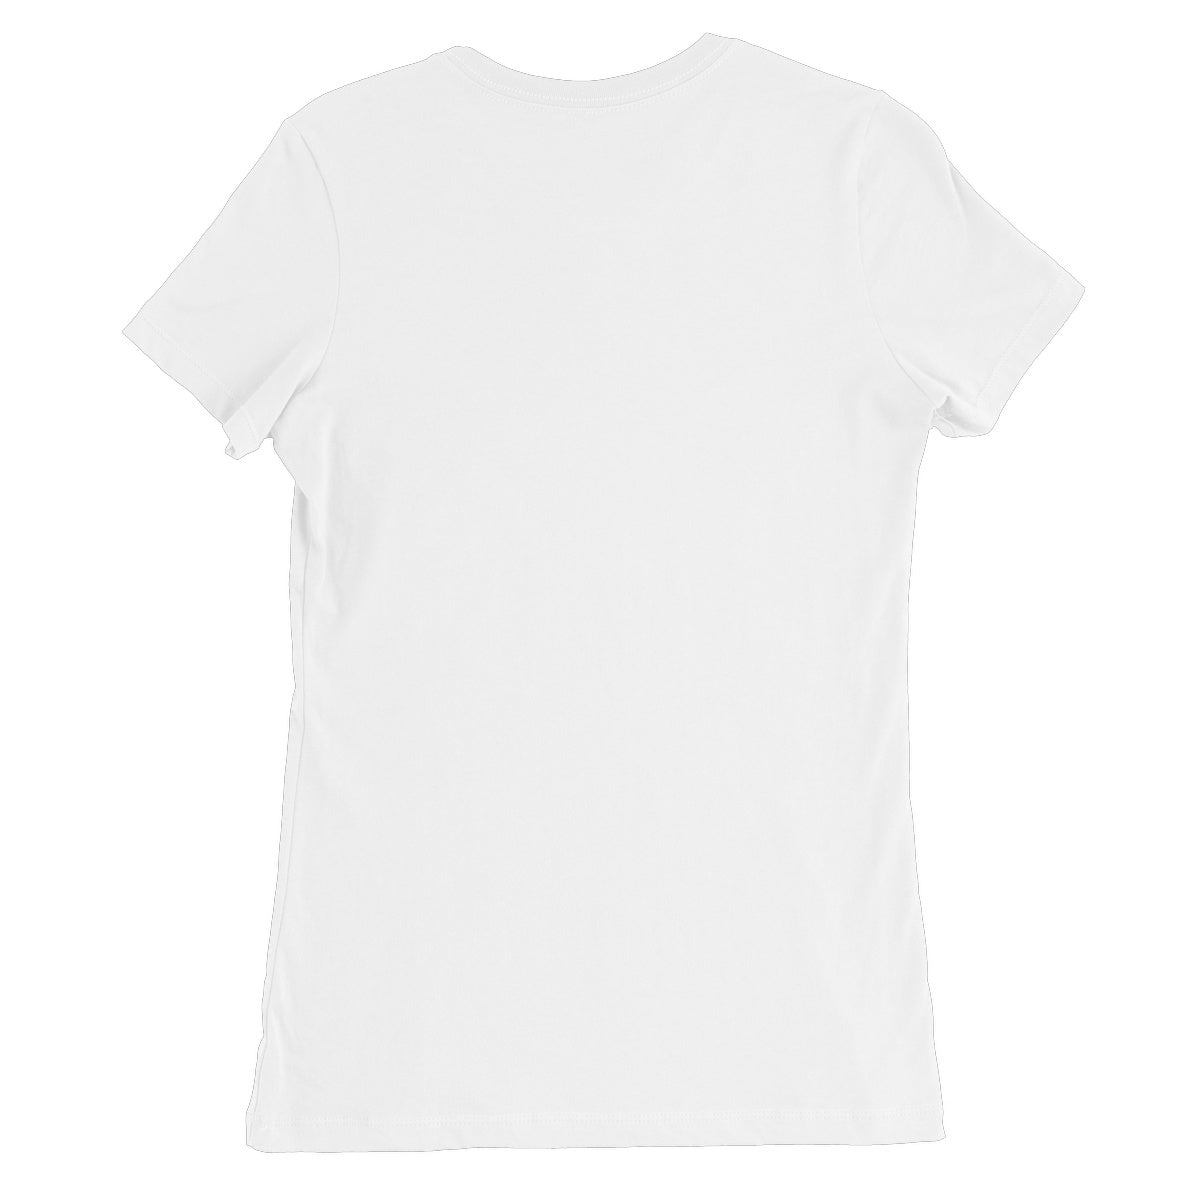 Loxodromes, Dawn Women's Favourite T-Shirt